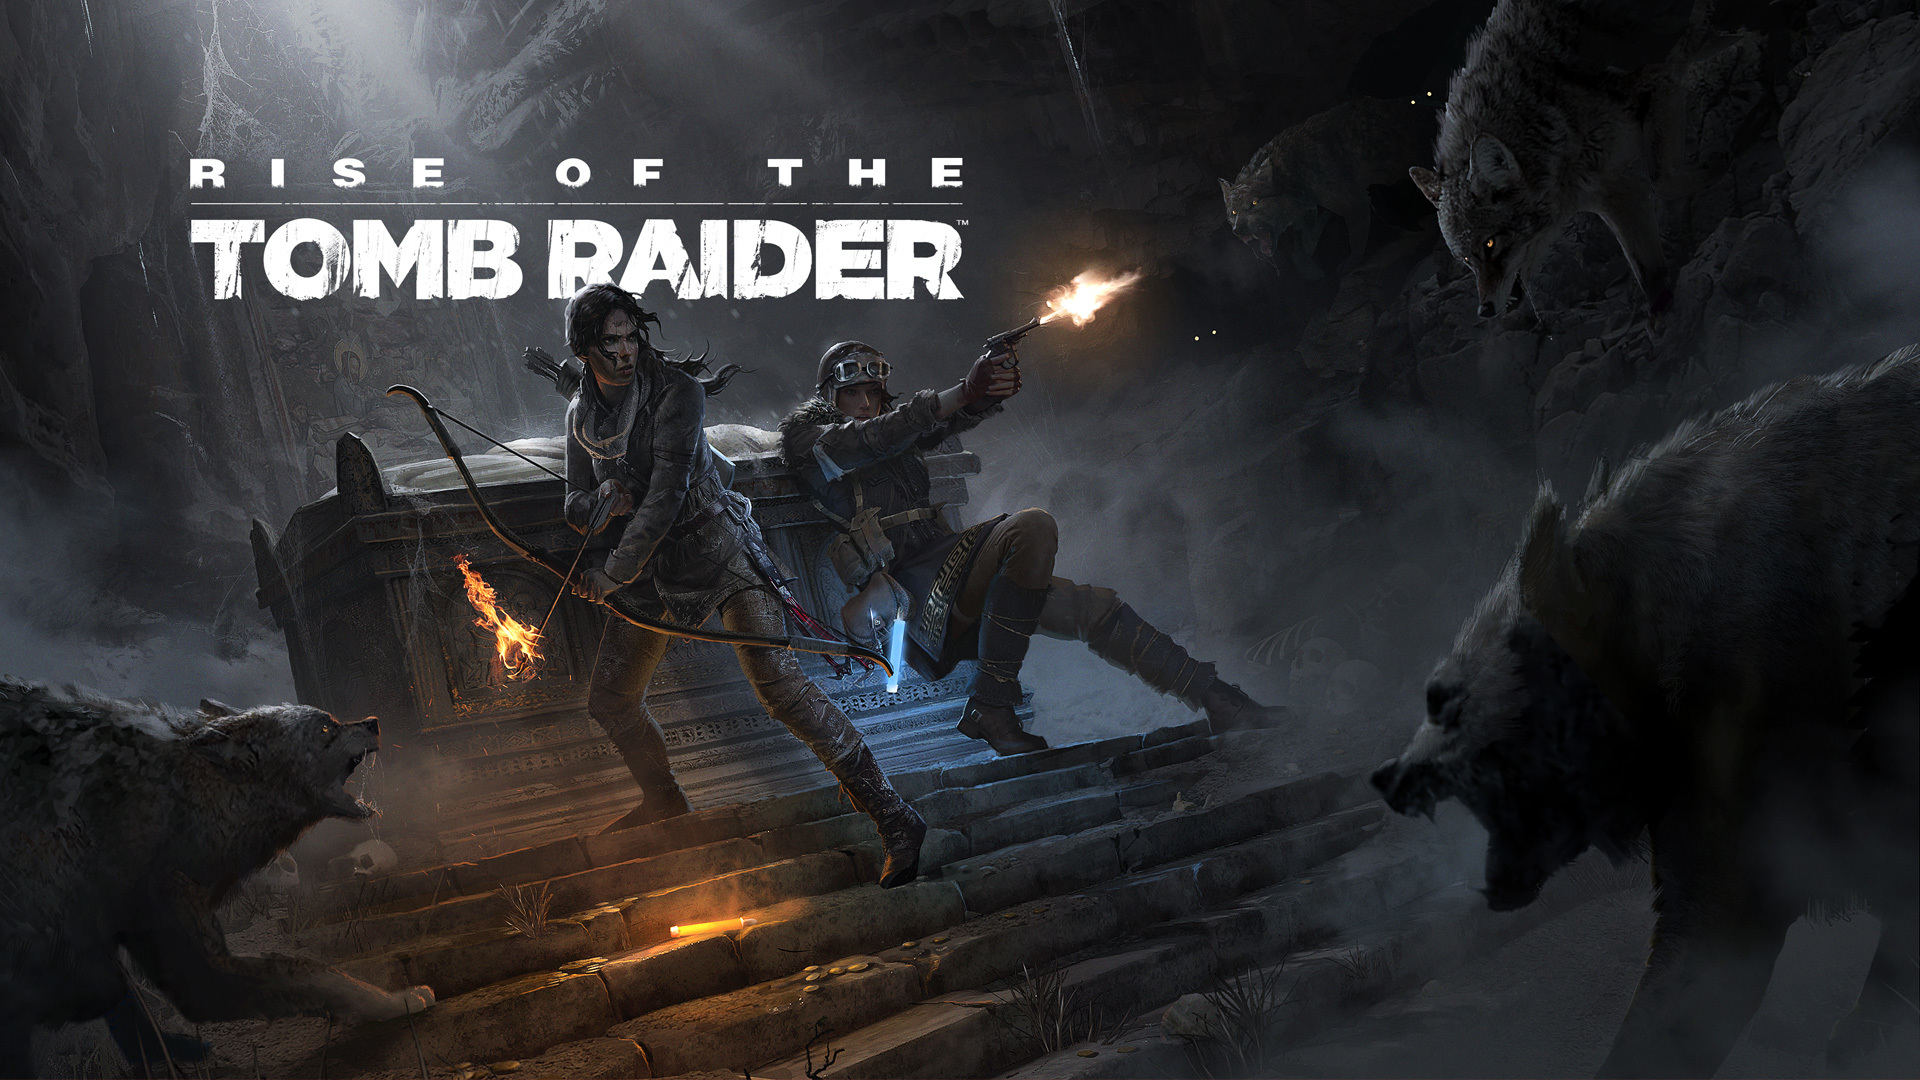 tomb raider, video game, rise of the tomb raider, lara croft